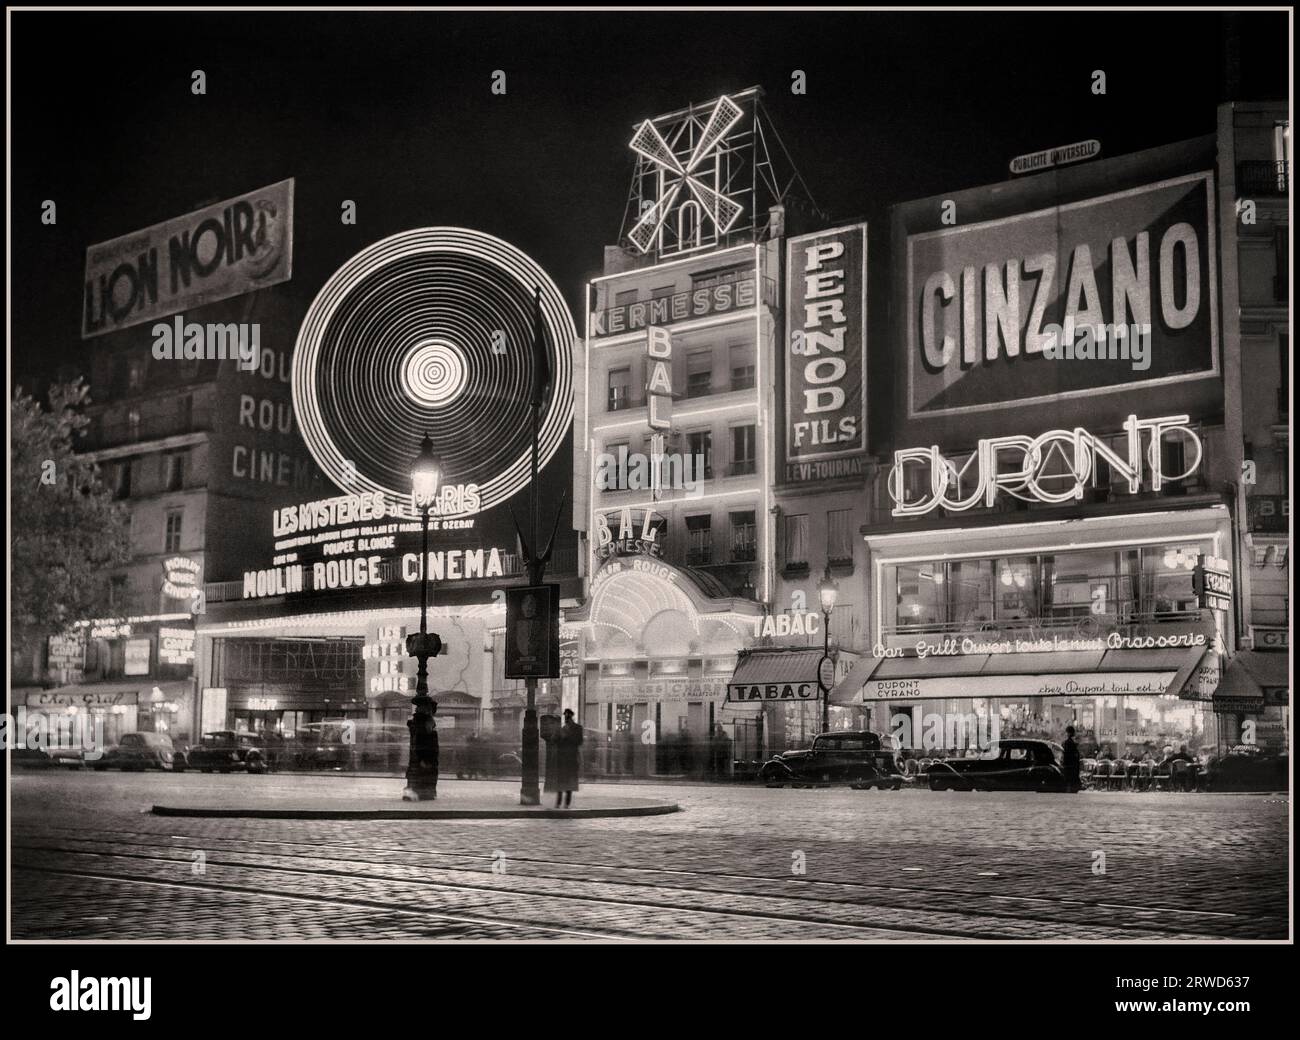 Retro Vintage Paris B&W 1930’s The Moulin Rouge Historic Montmartre Paris France at night  Alcohol Drinks Advertising Hoardings, Cinzano, Pernod, DuPont. Lion Noir. 1936: France, Paris Moulin Rouge Photographer :  Willem van de Poll Stock Photo